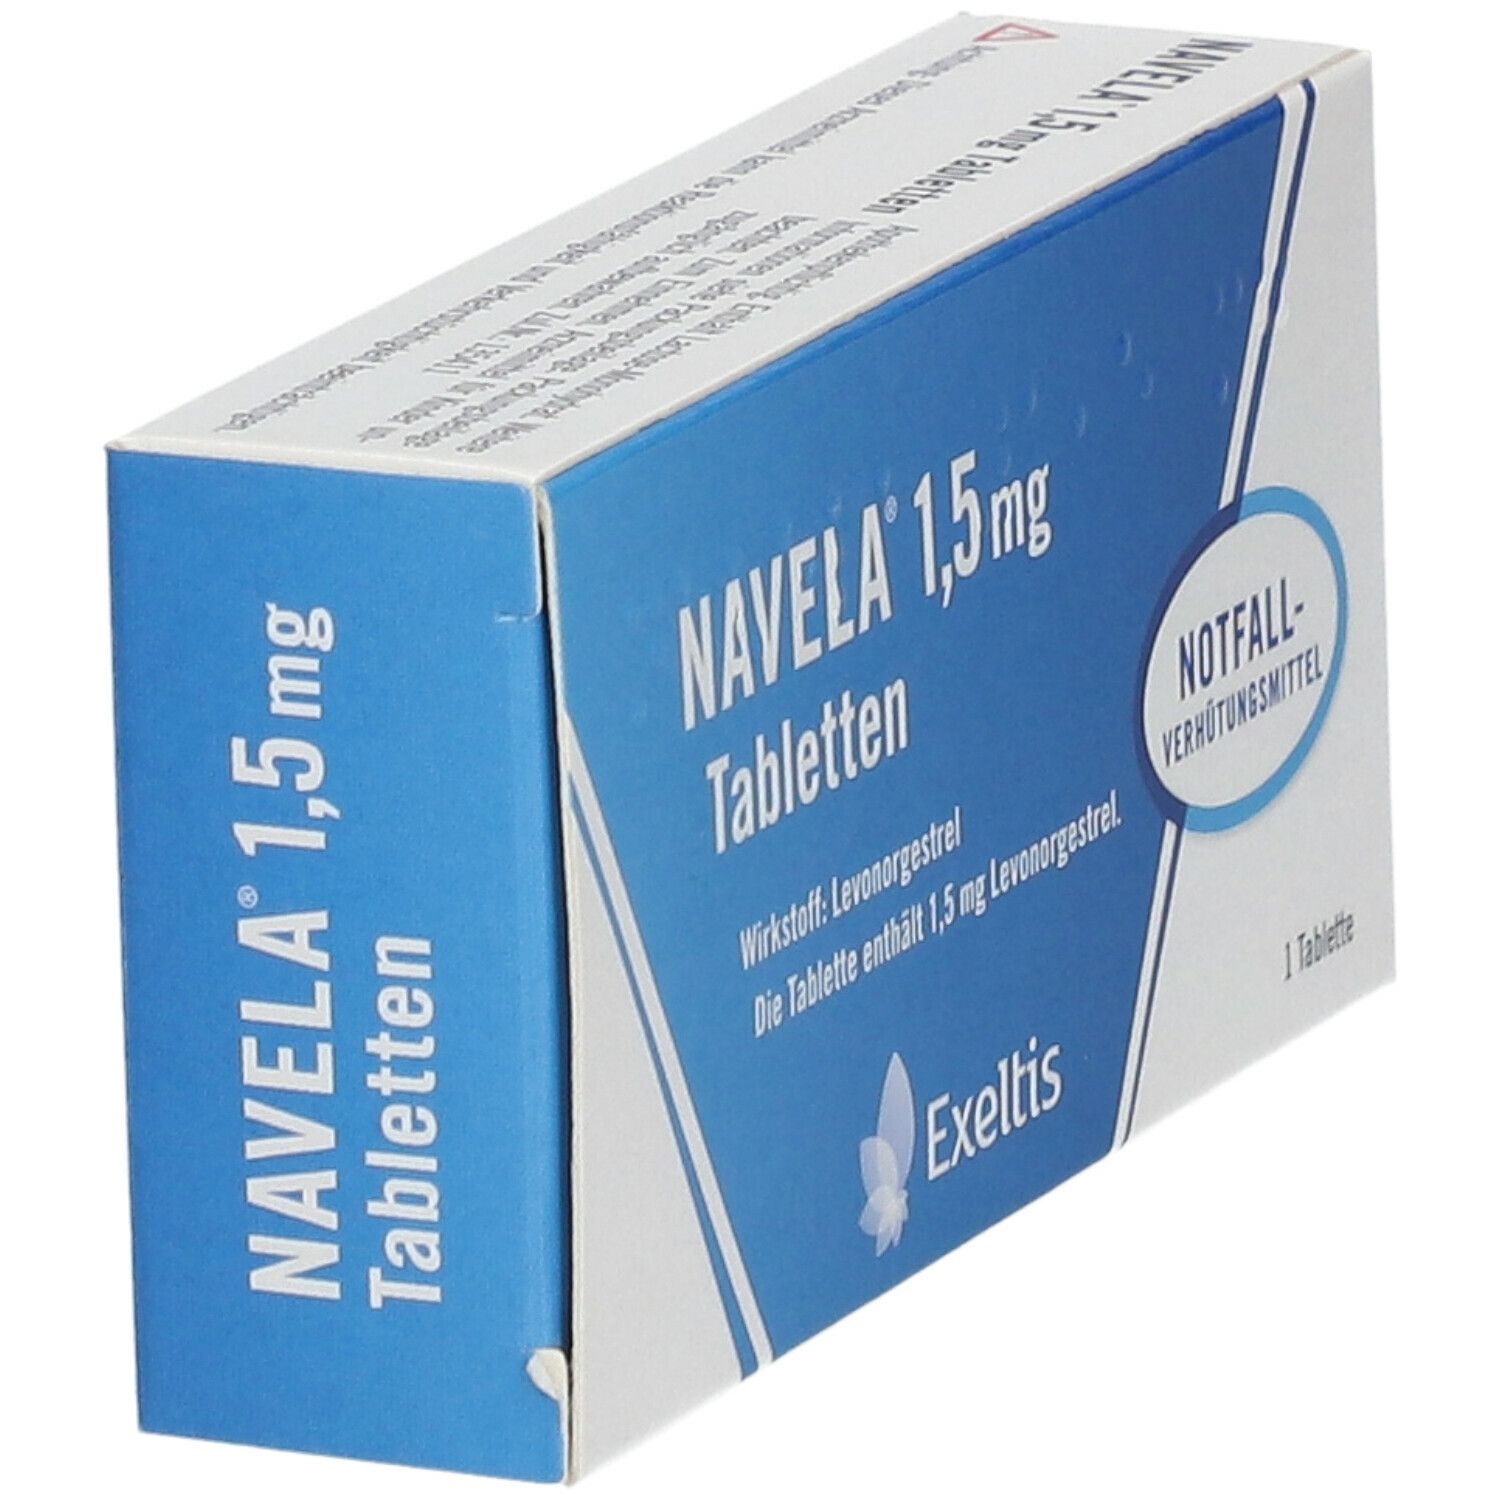 NAVELA® 1,5 mg